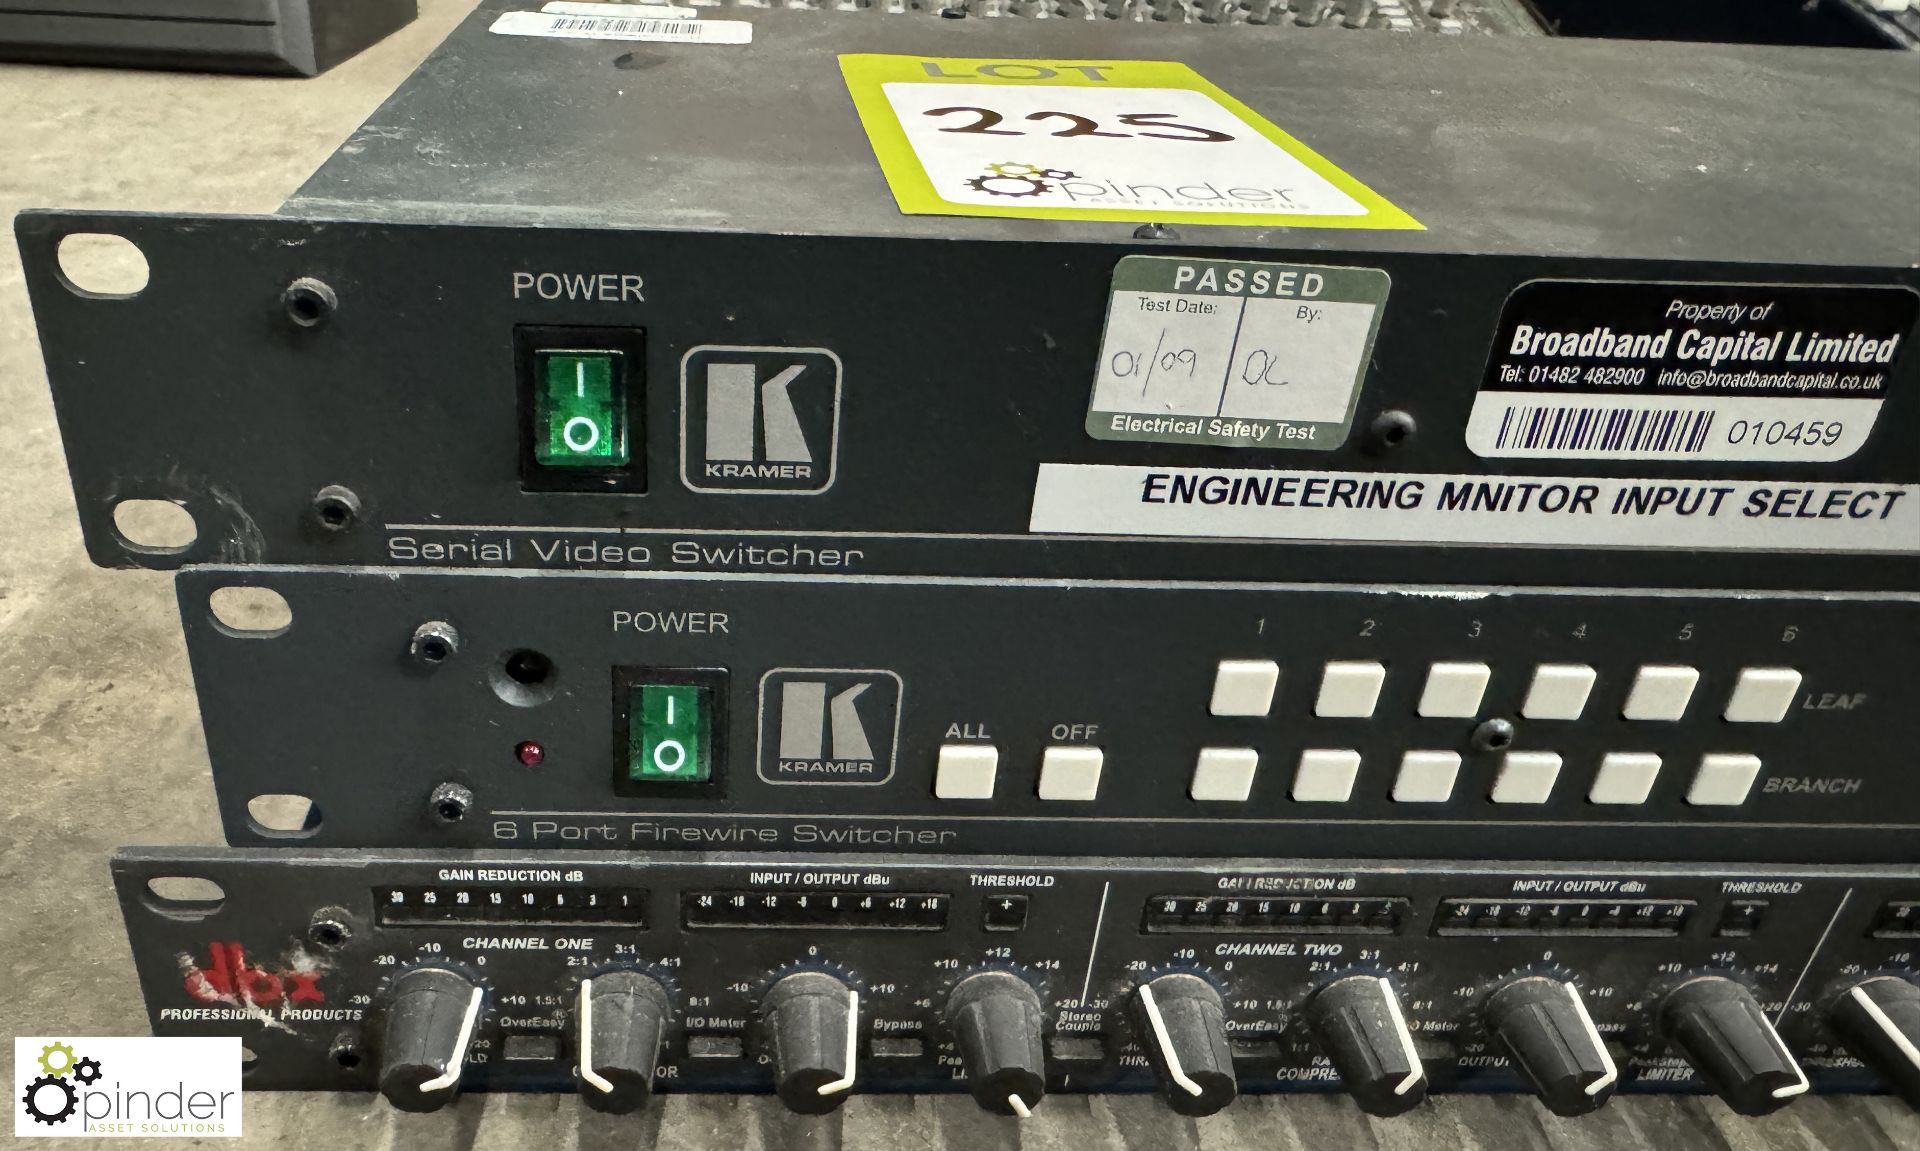 Kramer SD-7308 Serial Video Switcher, Kramer VS-66FW 8-port Firewire Switcher and DBX 1646 Quad - Image 2 of 4